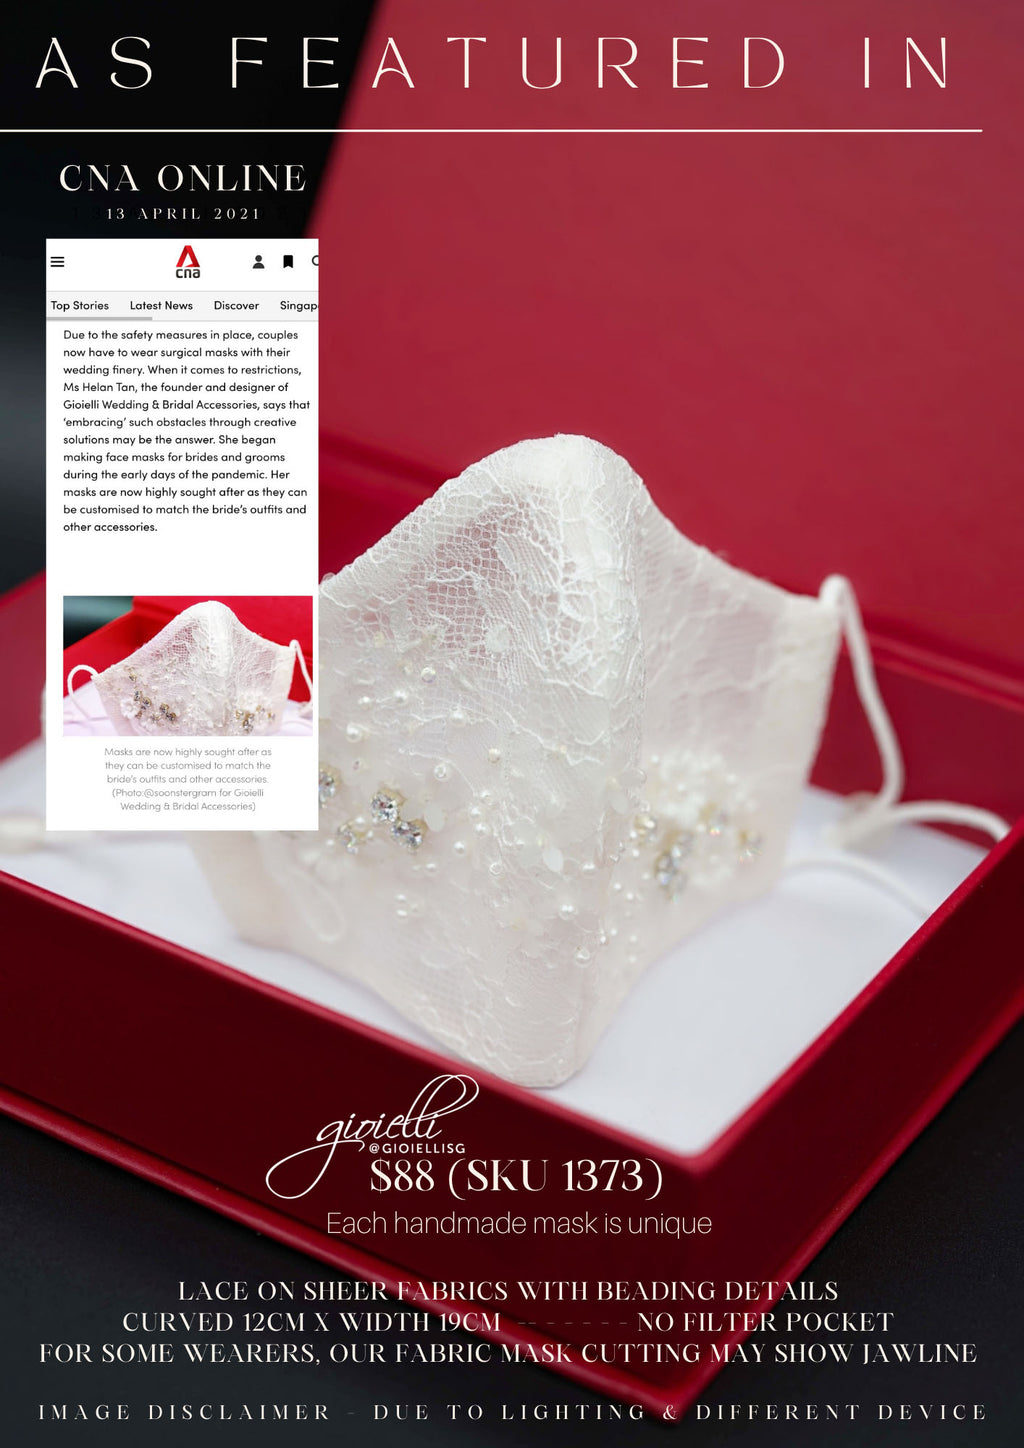 Gioielli CNA Bridal Lace Mask with Beadings on Sheer Fabrics by Helan Tan